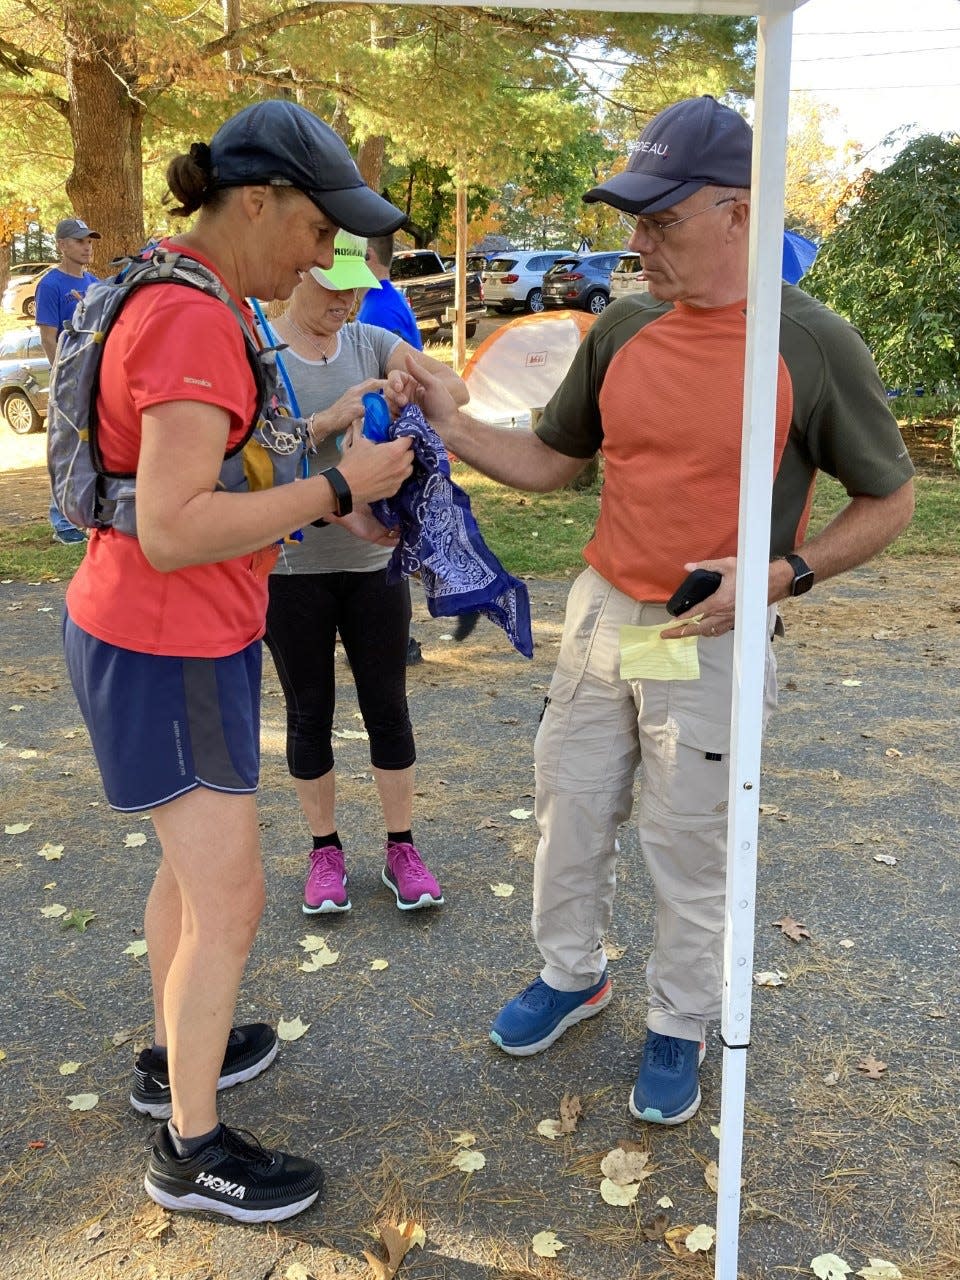 Ultramarathoner Christy Boris trades backpacks with her husband Mike